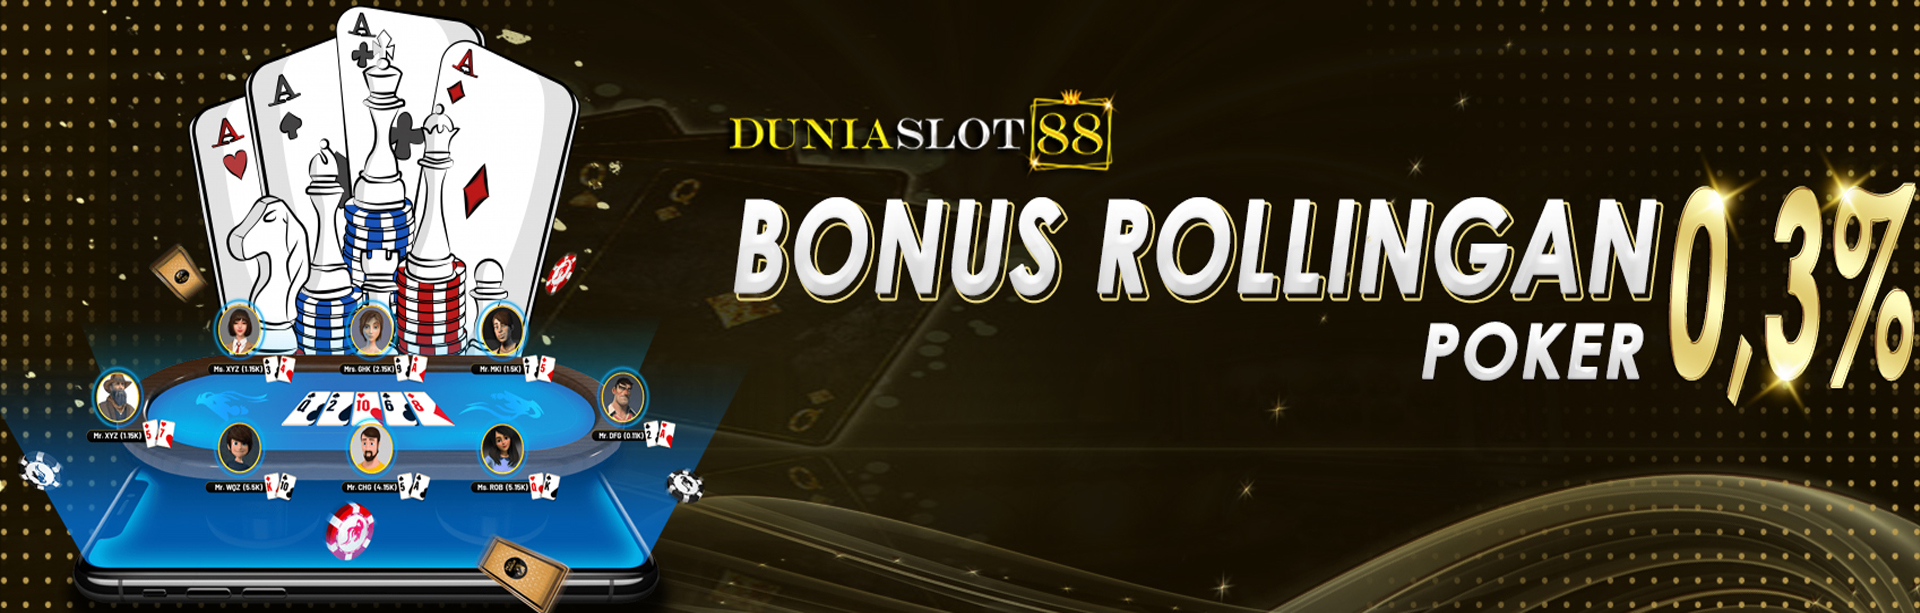 Bonus Rollingan Poker 0,3%